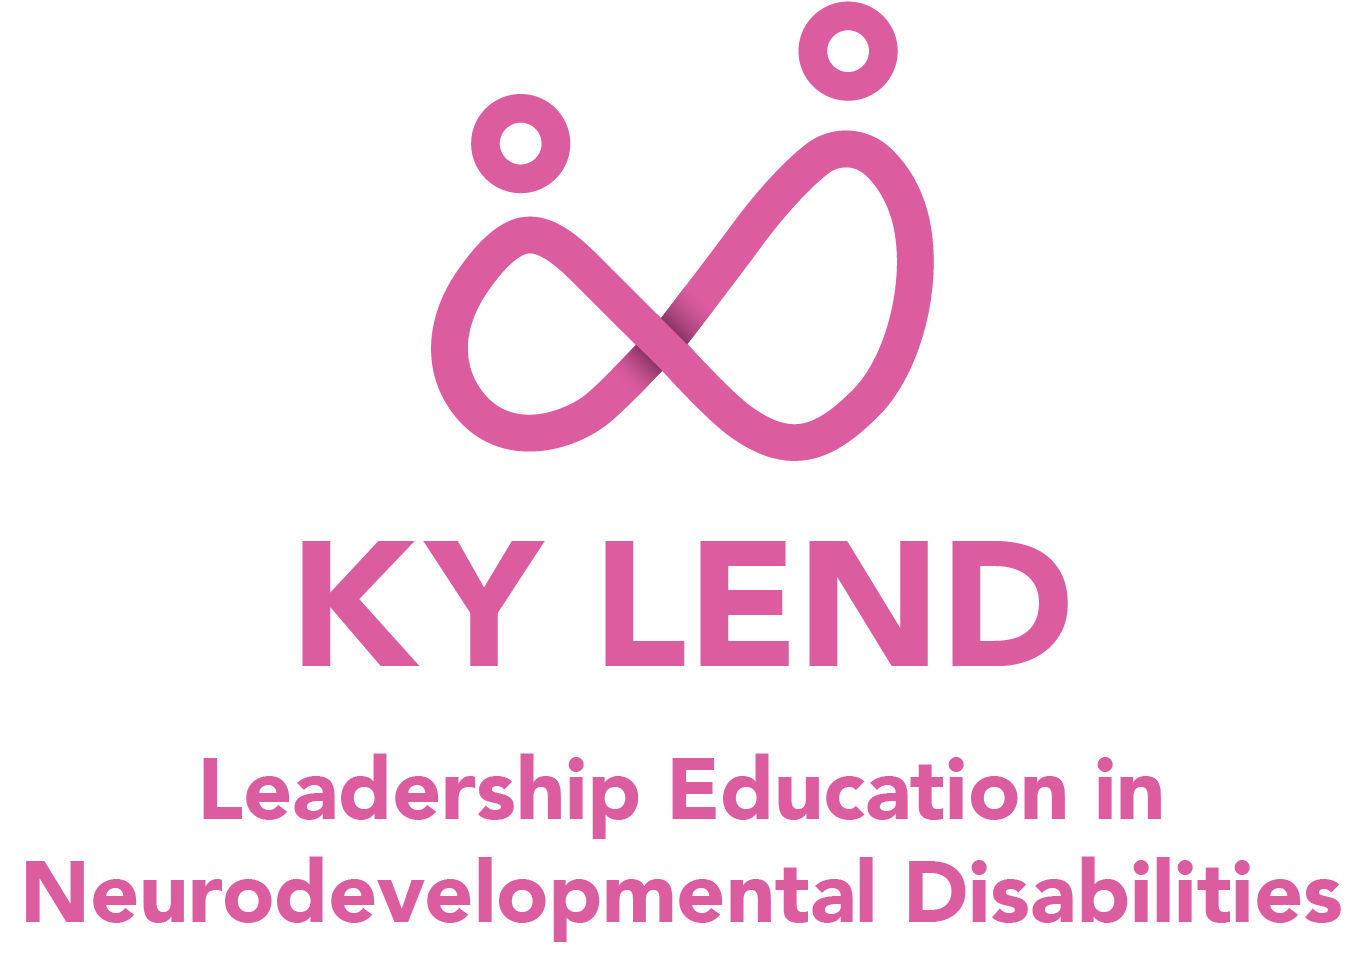 Kentucky LEND logo